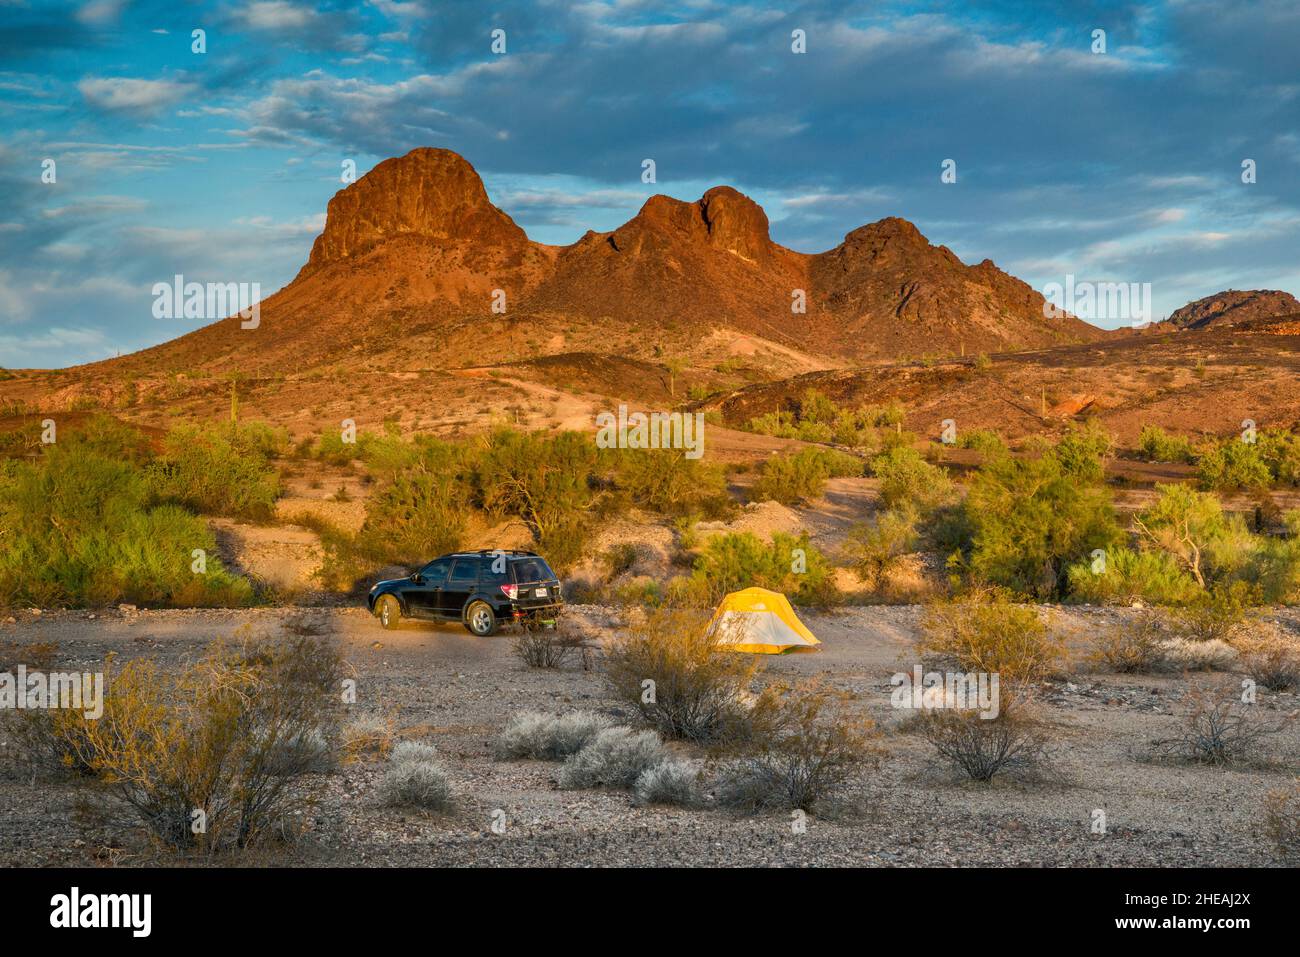 Four Peaks, campsite, at sunrise, road 0080, Plomosa Mountains, Sonoran Desert, Arizona, USA Stock Photo